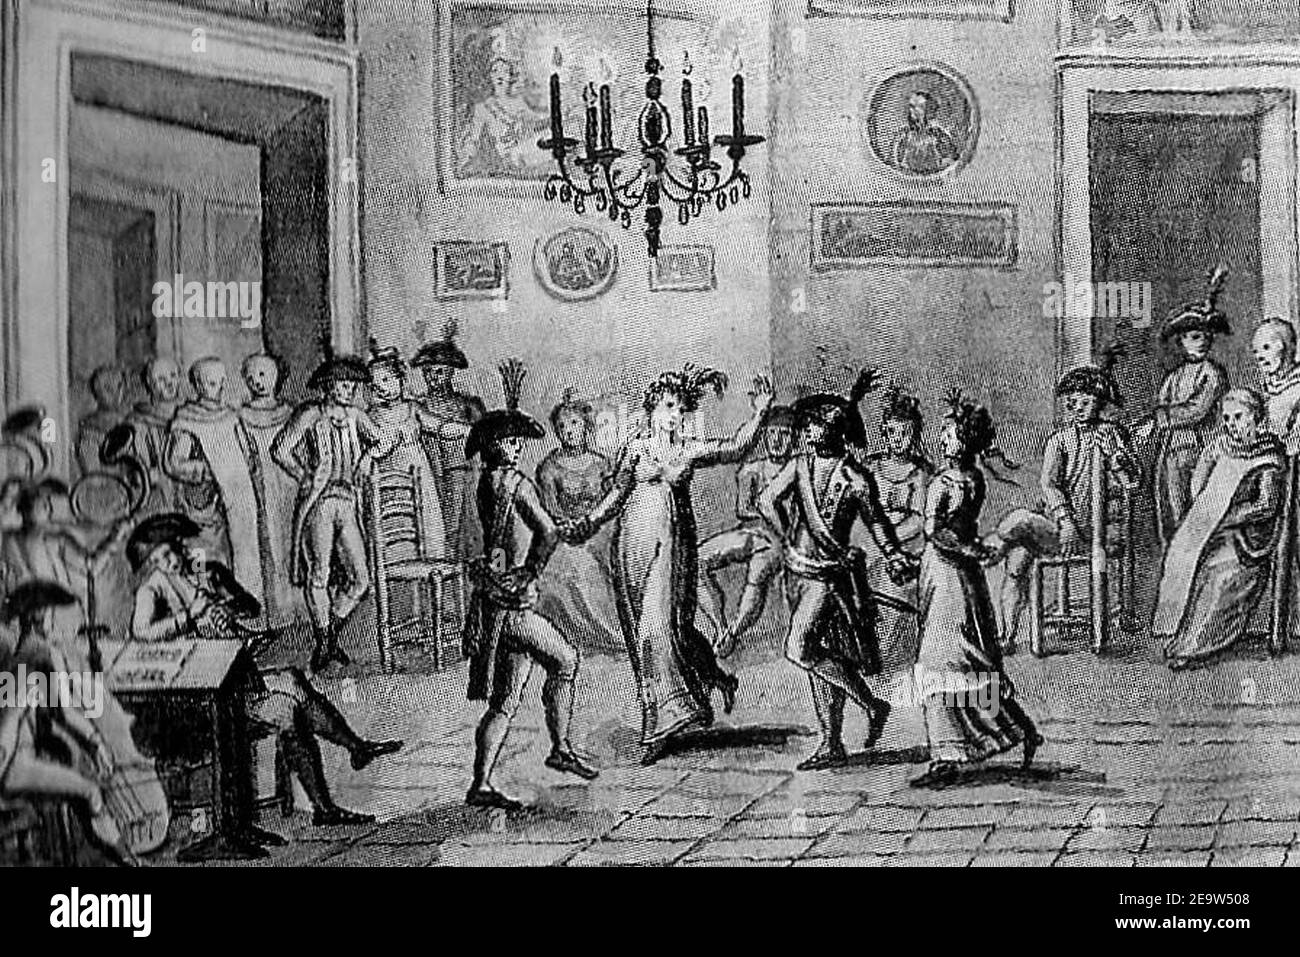 Napoli 1799 - Festeggiamenti dei rivoluzionari. Stockfoto